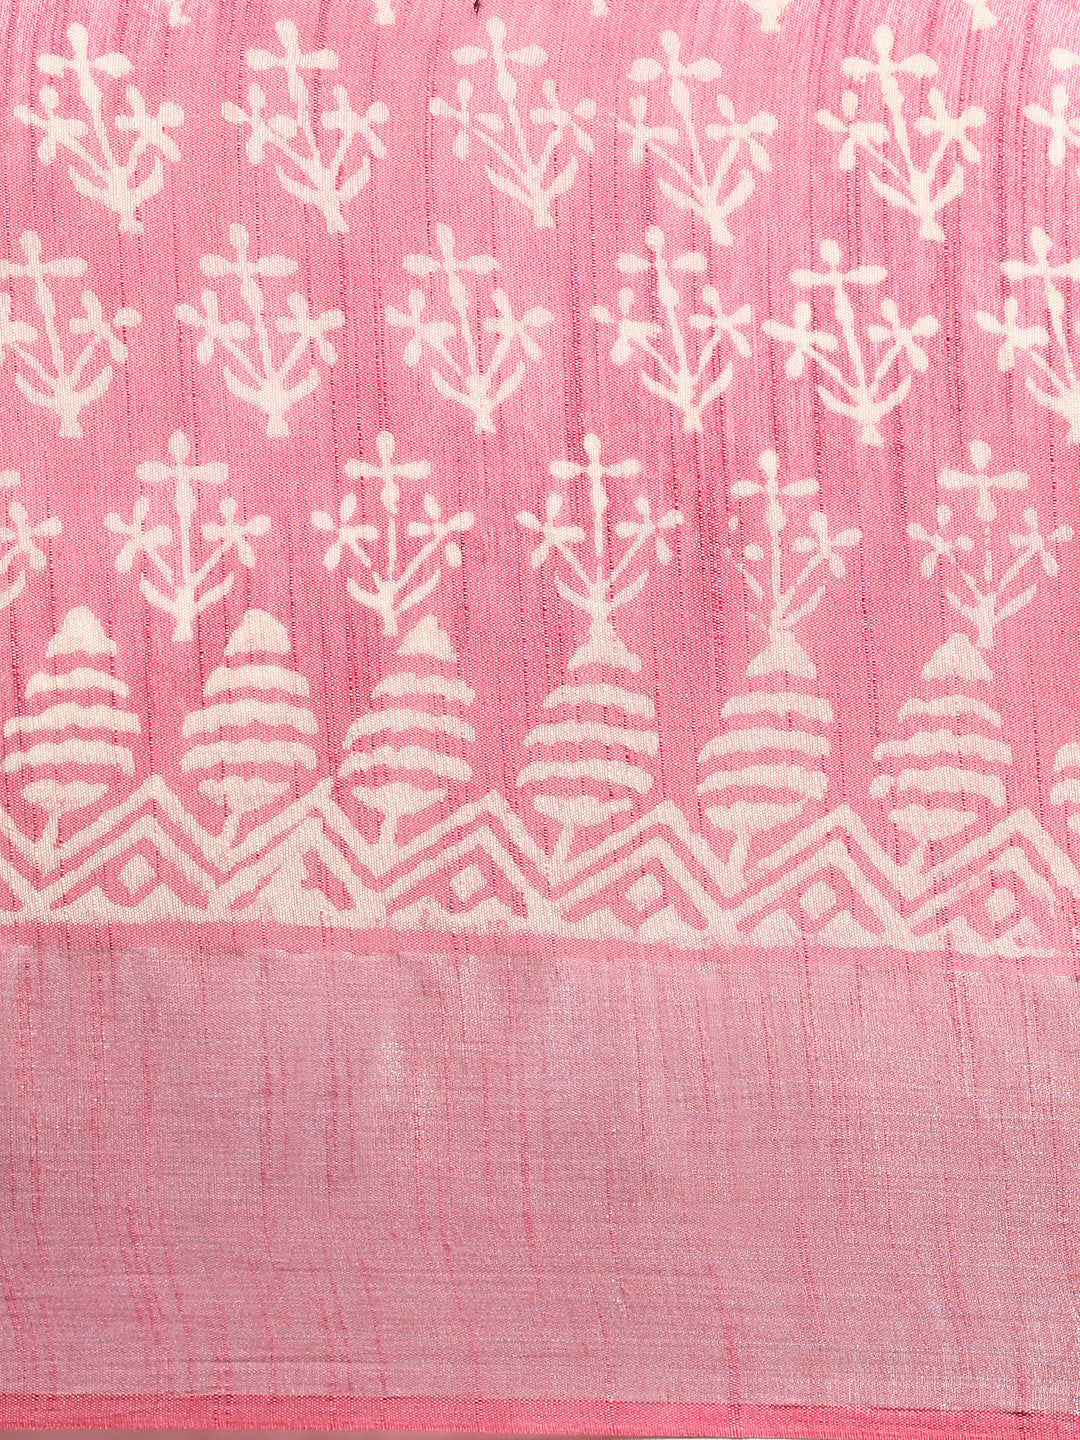 Womens Elegant Pink Flower Printed with Silver Jari Pure Cotton Saree PCS65